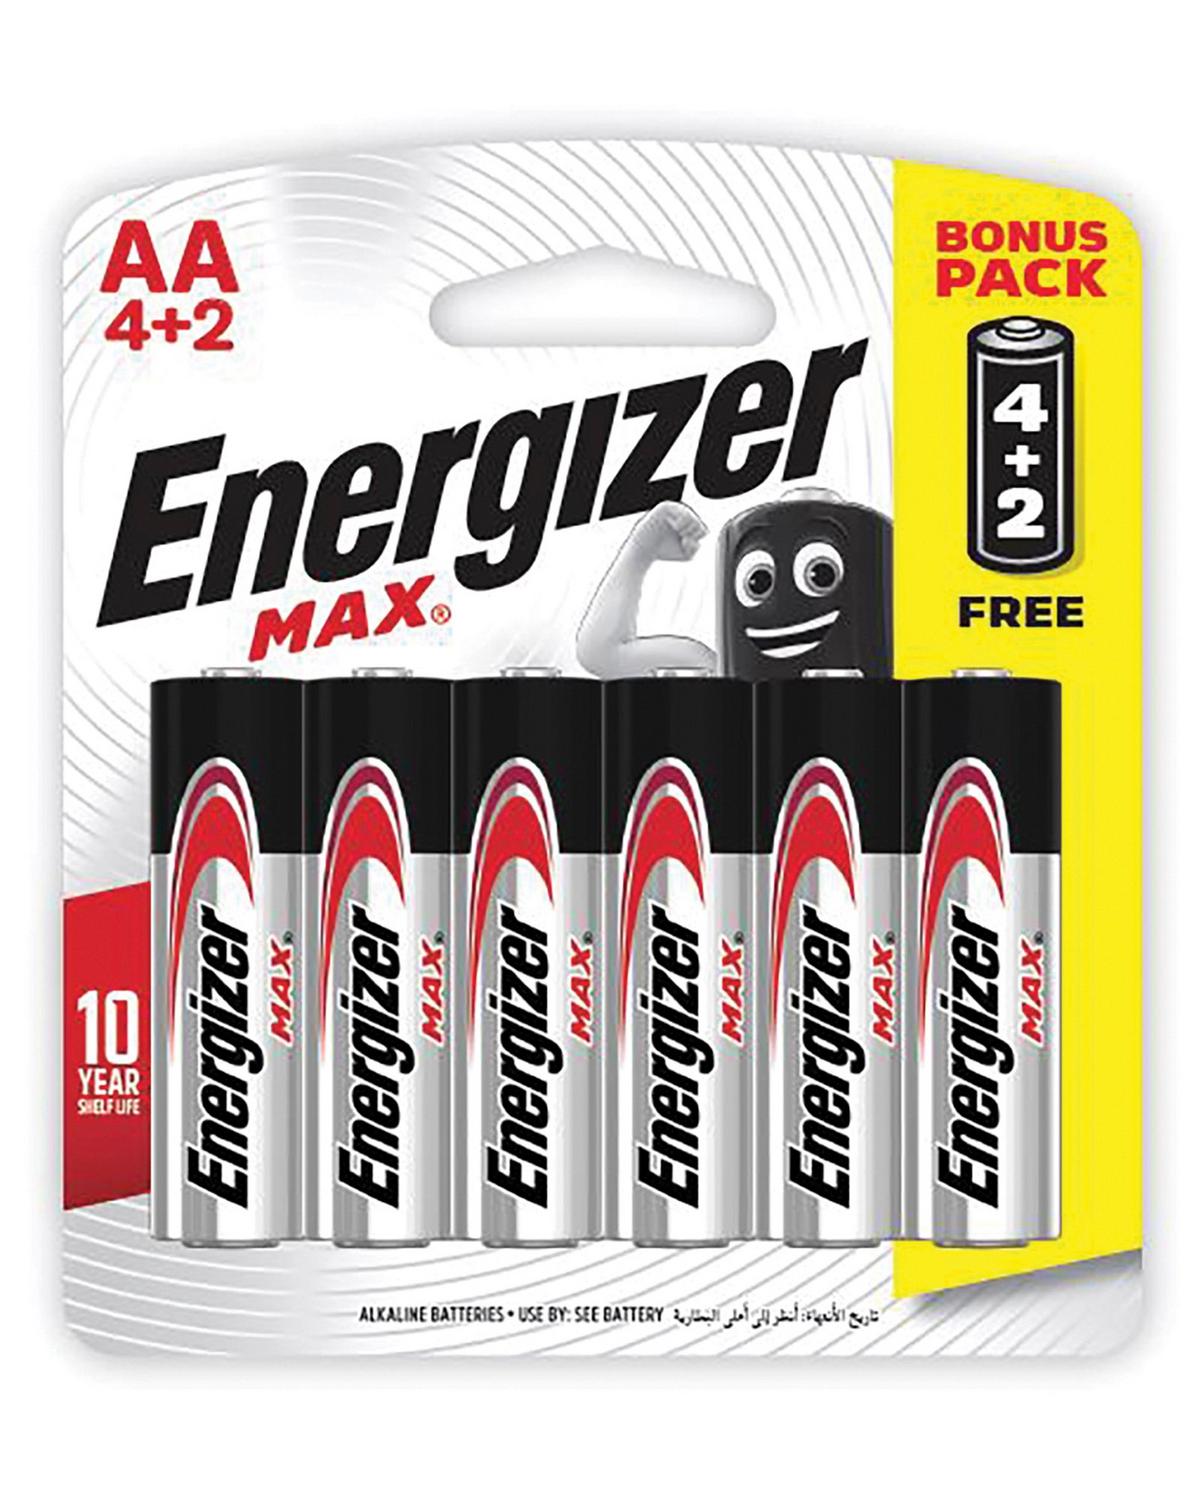 Energizer Max AA 4+2 Energizer Disposable Batteries